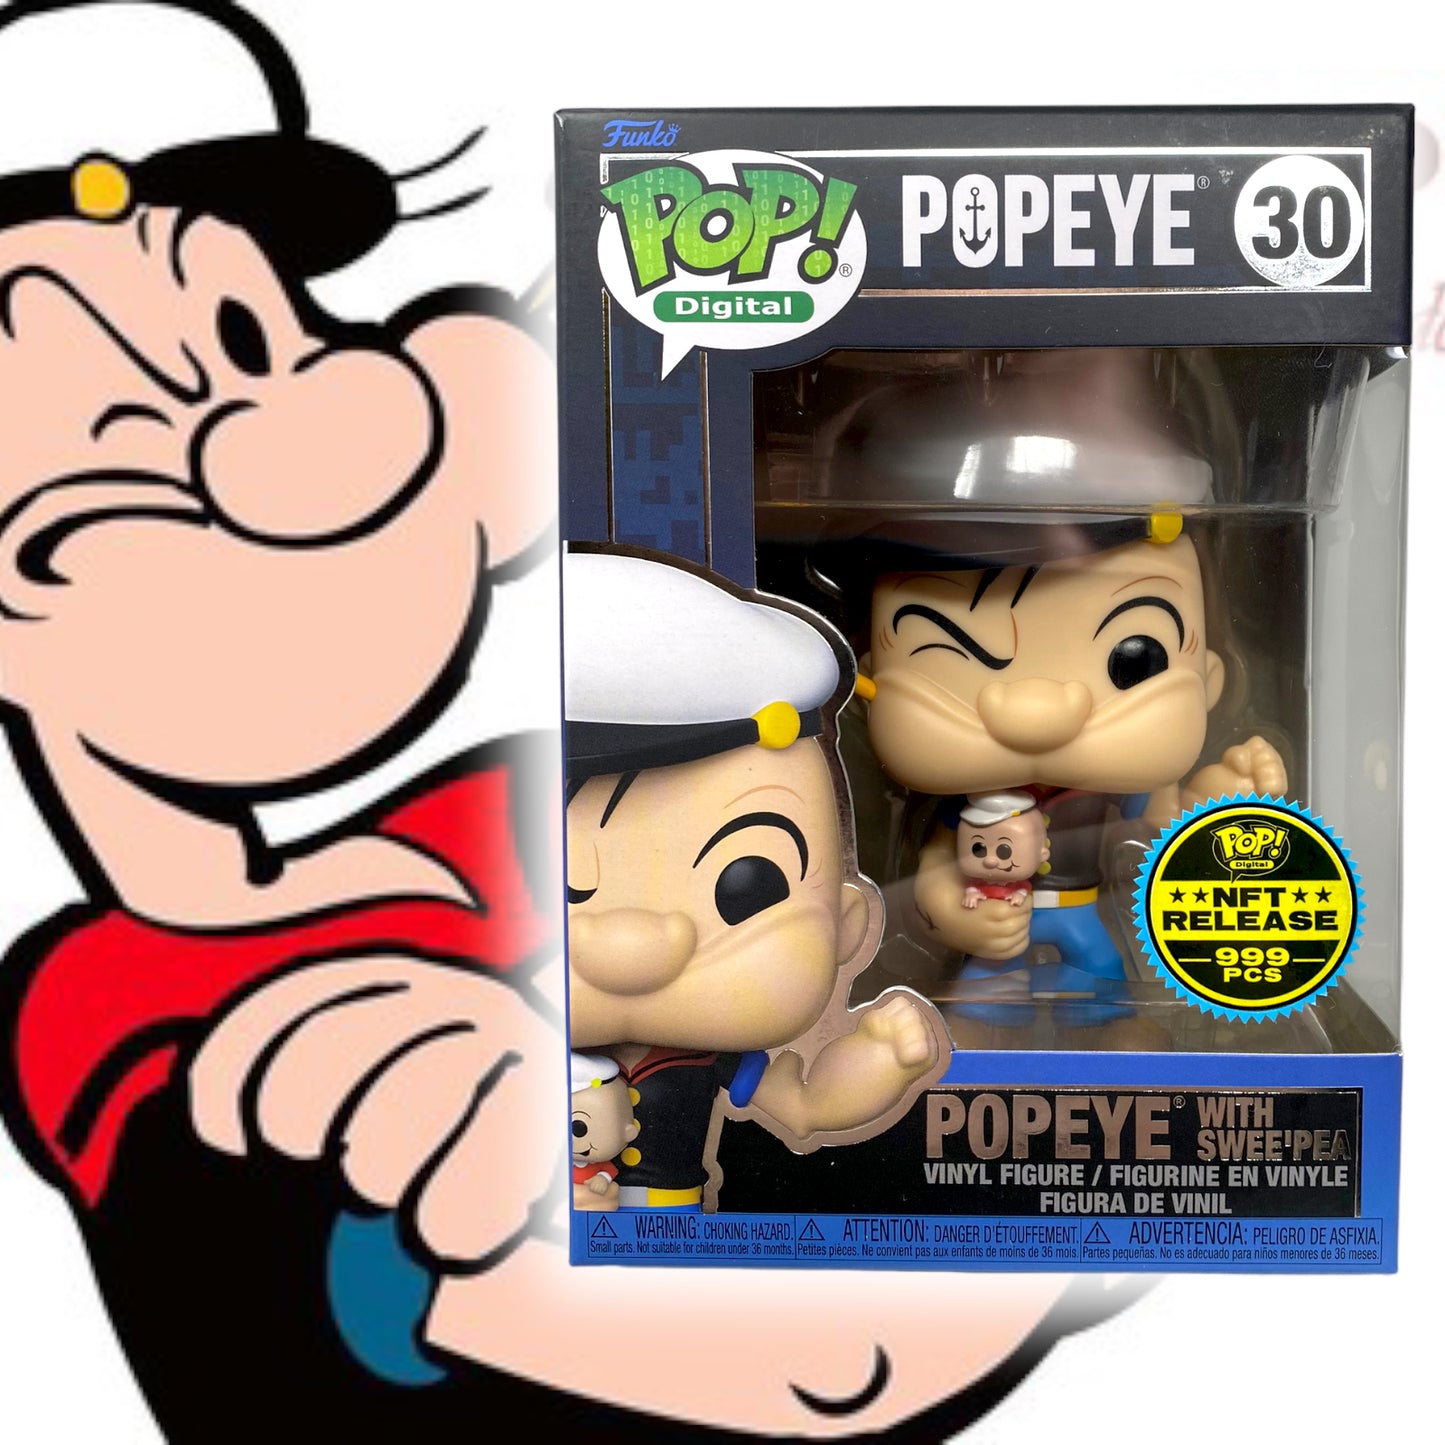 2022 NFT Popeye with Swee’pea 30, NFT Release 999 pcs